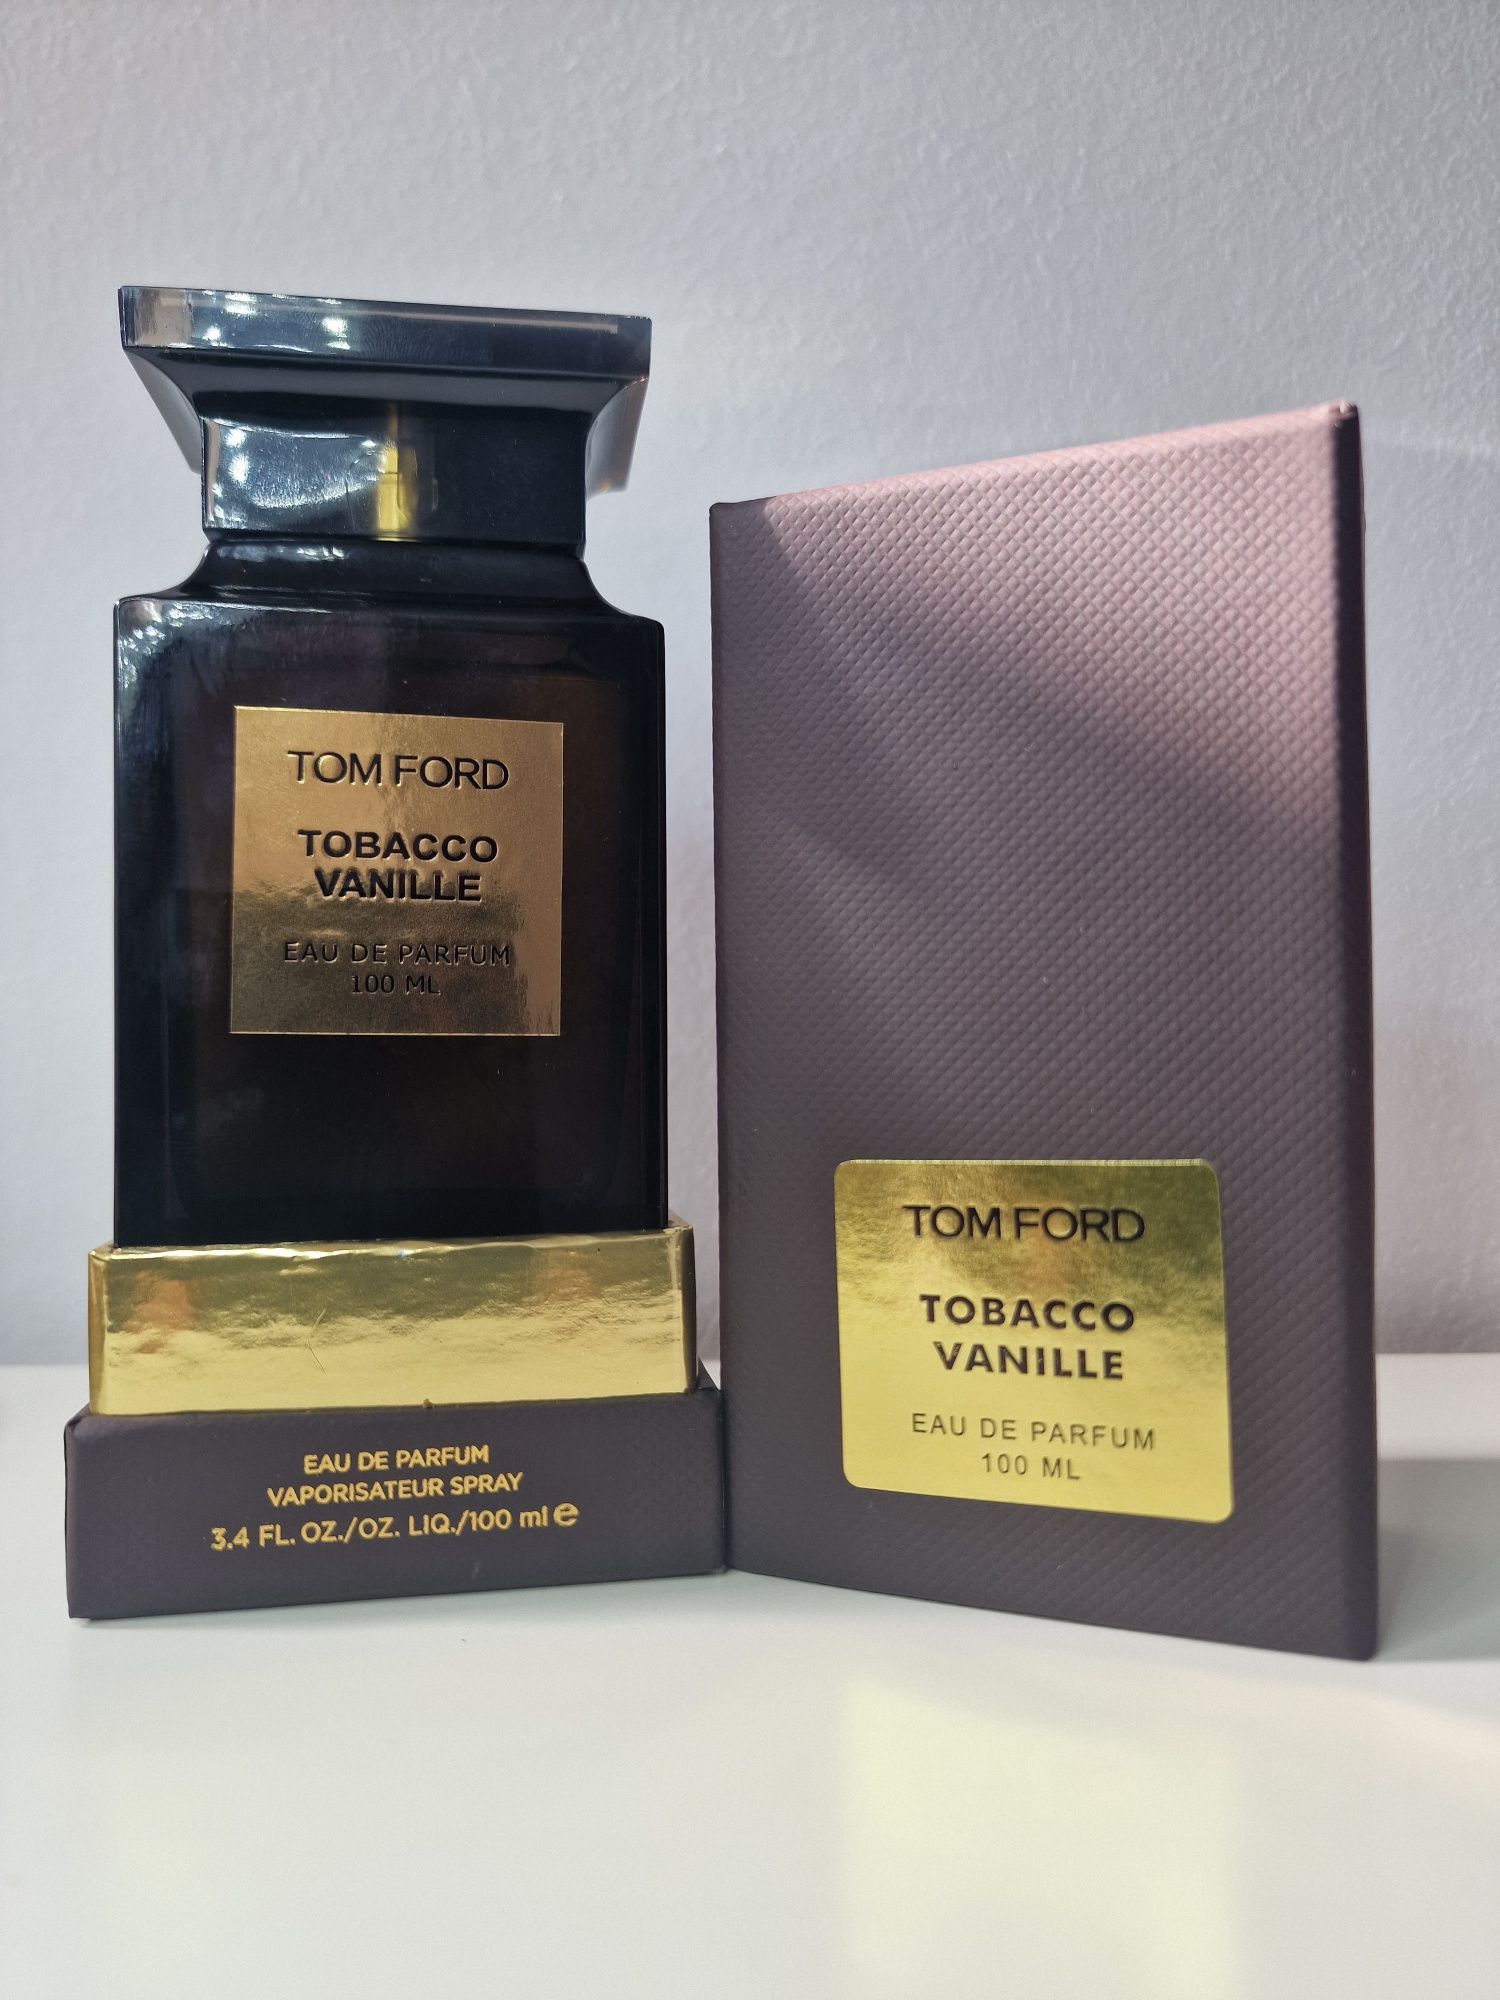 Tom Ford - Tobacco Vanille - Eau de Parfum - 100 ml - Sigilat